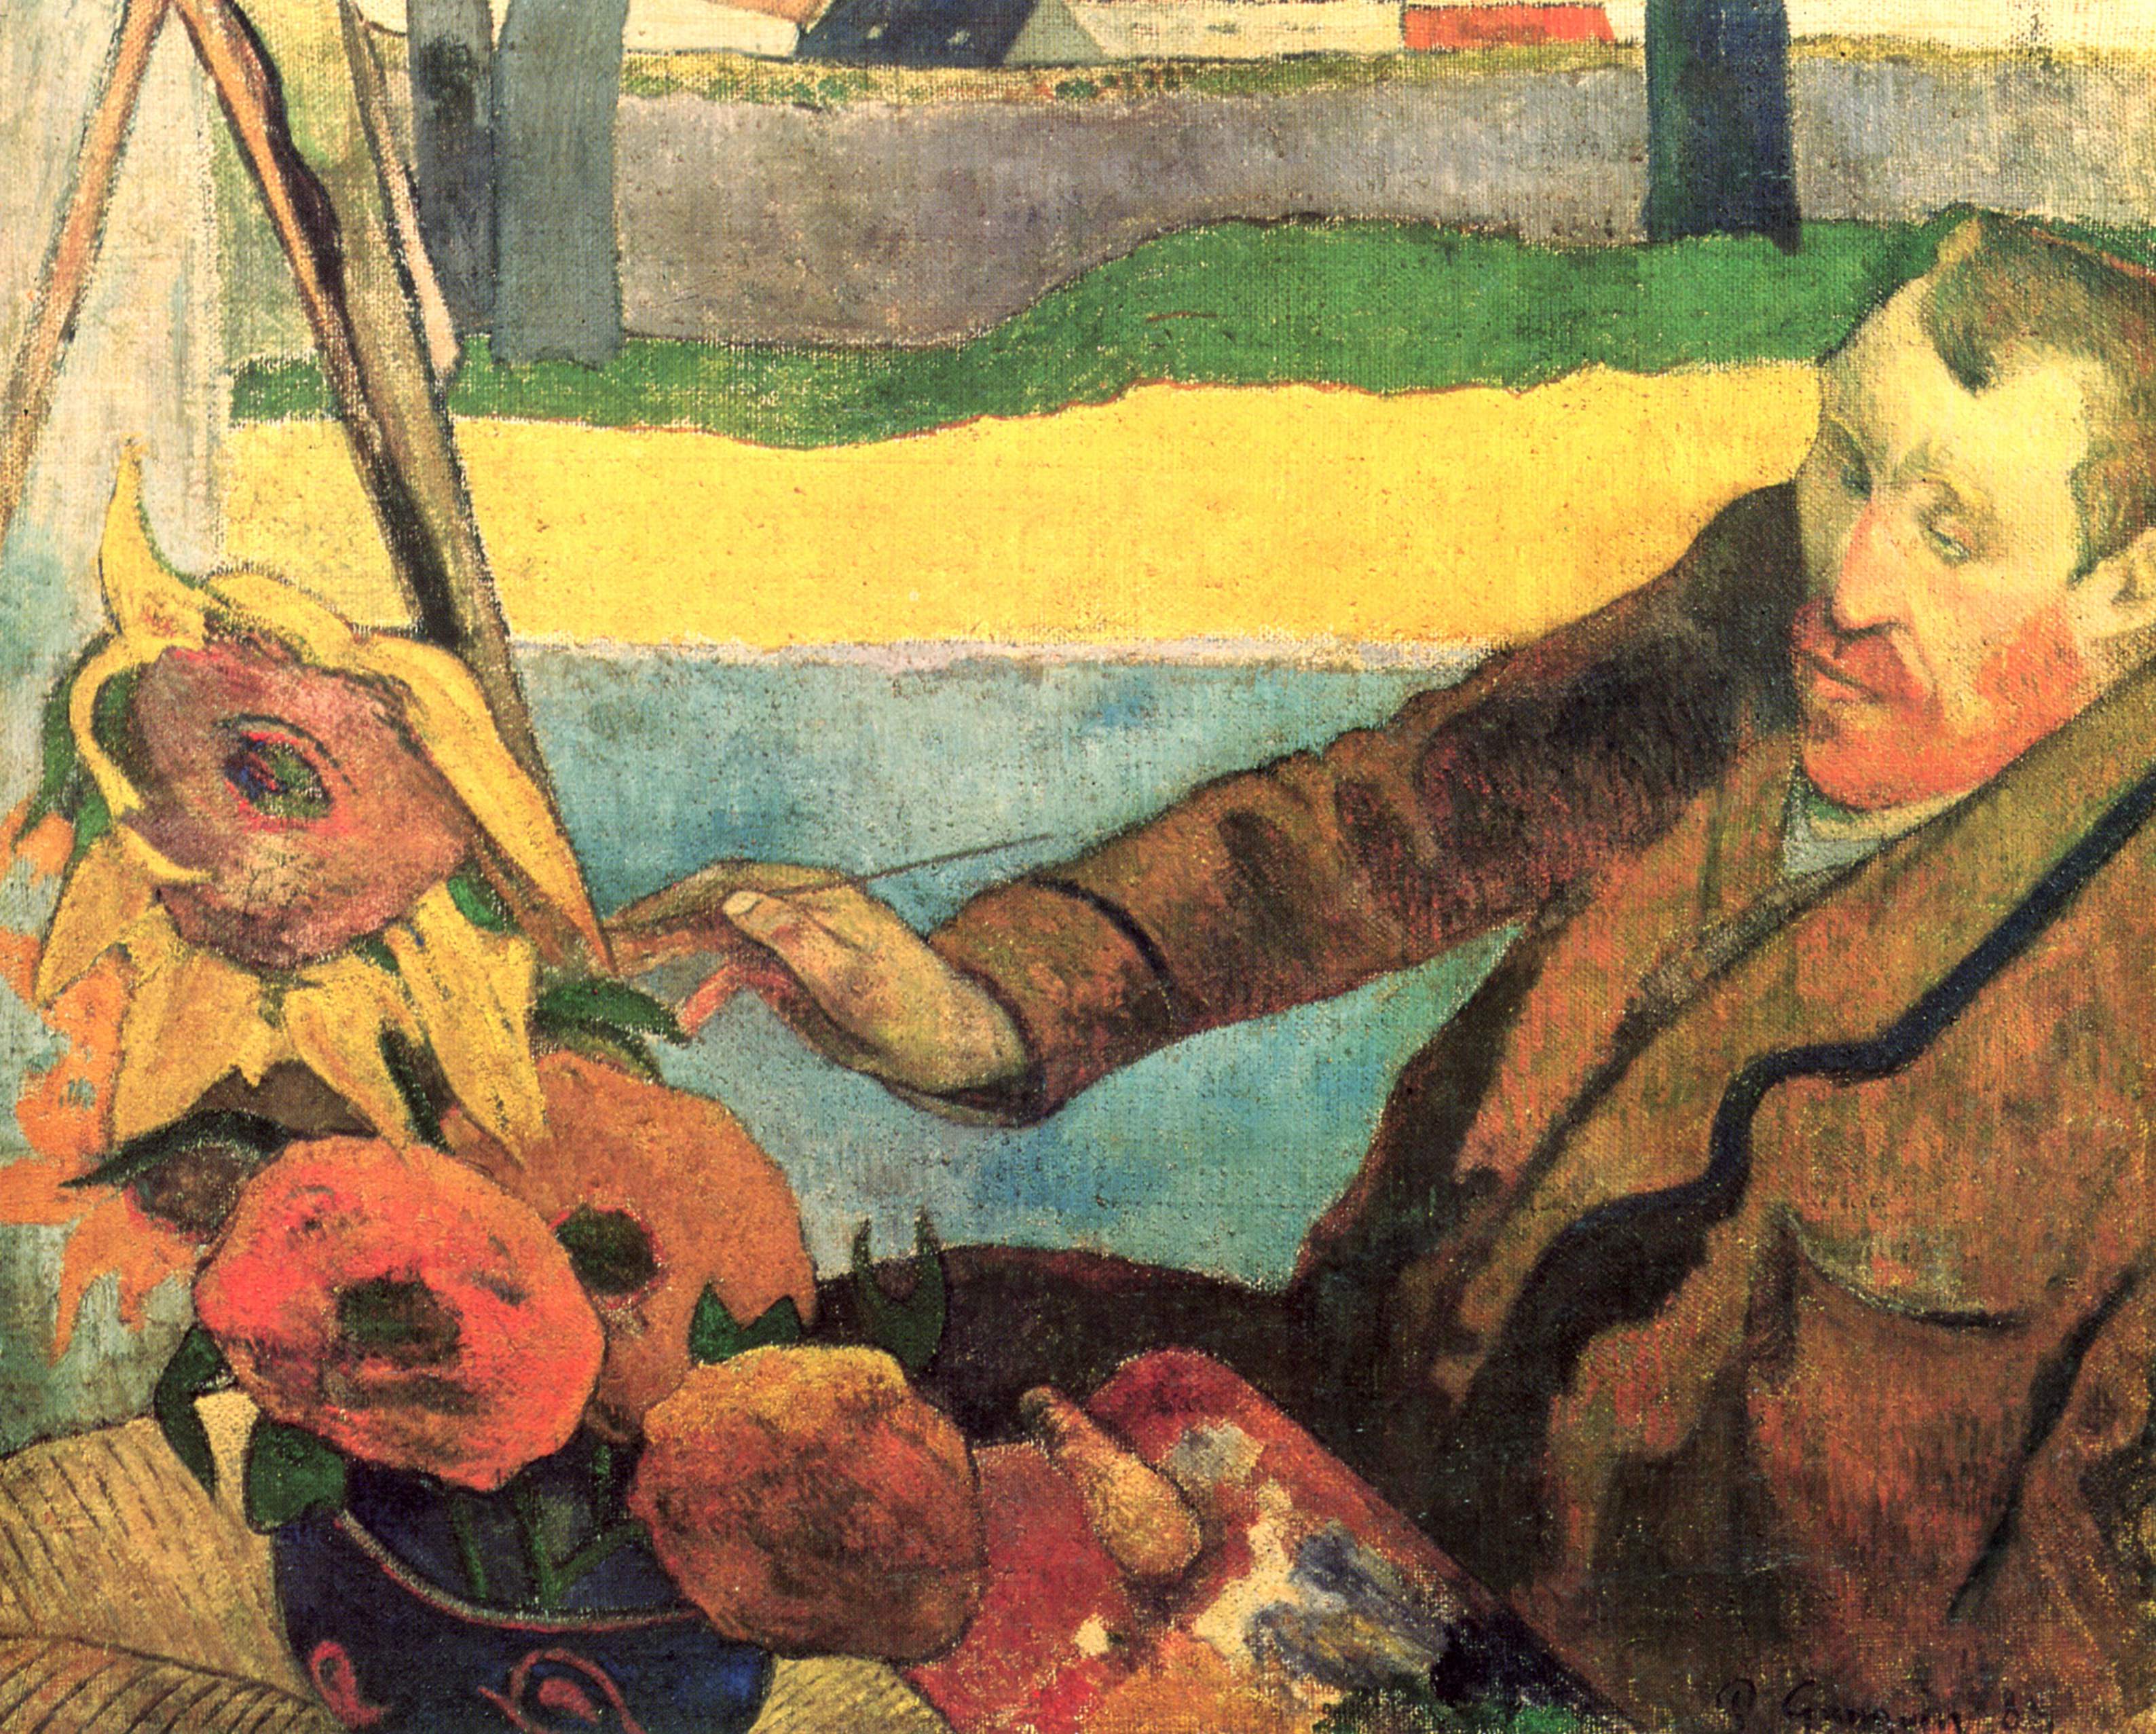 http://upload.wikimedia.org/wikipedia/commons/7/71/Paul_Gauguin_104.jpg